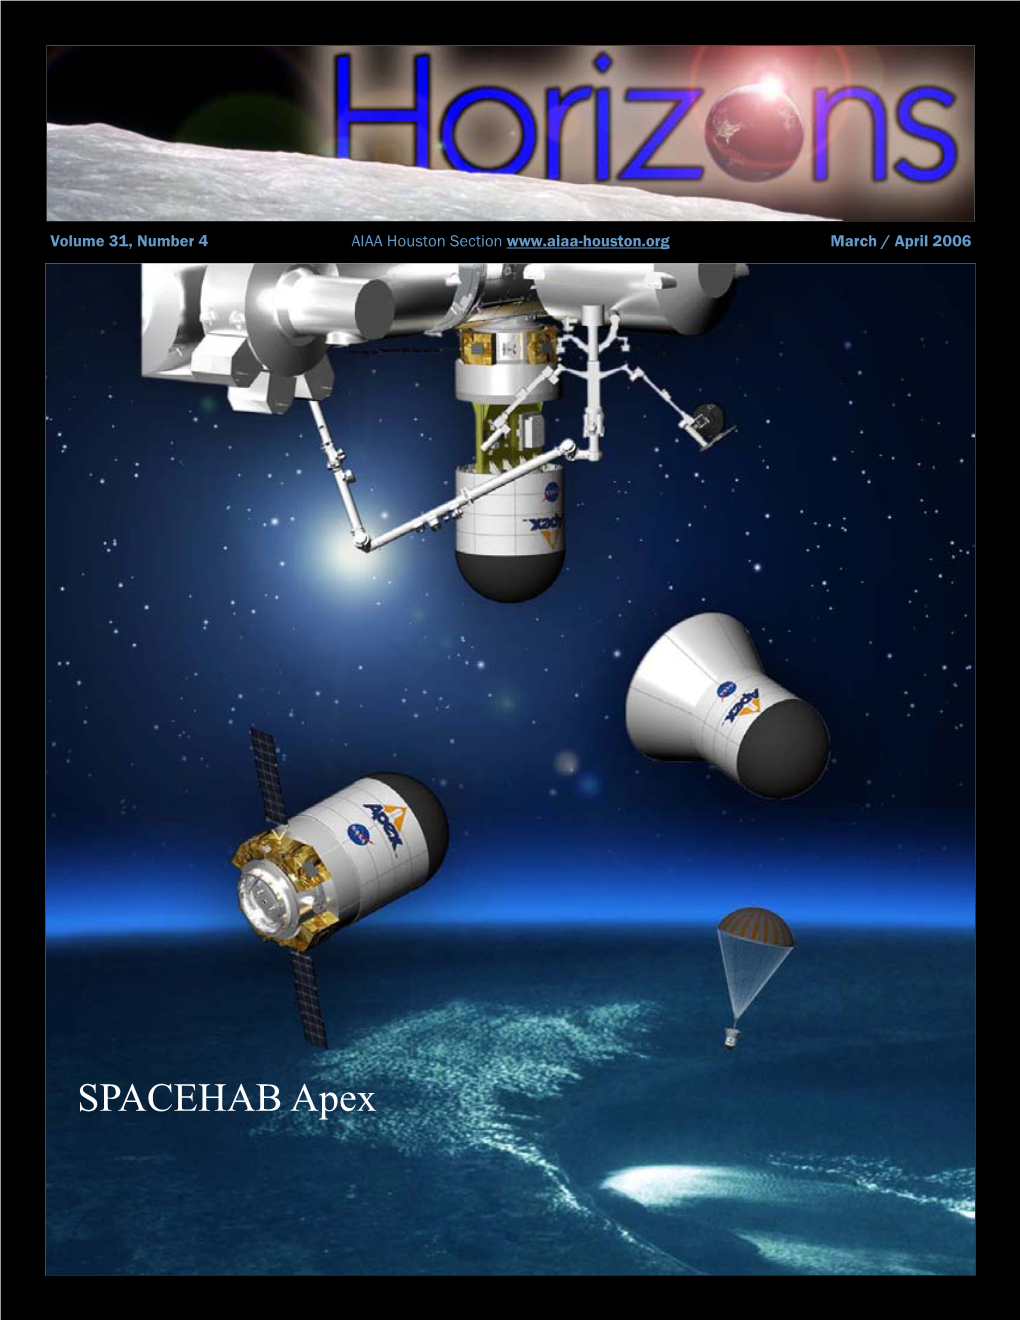 Horizons, the AIAA Houston Online Magazine